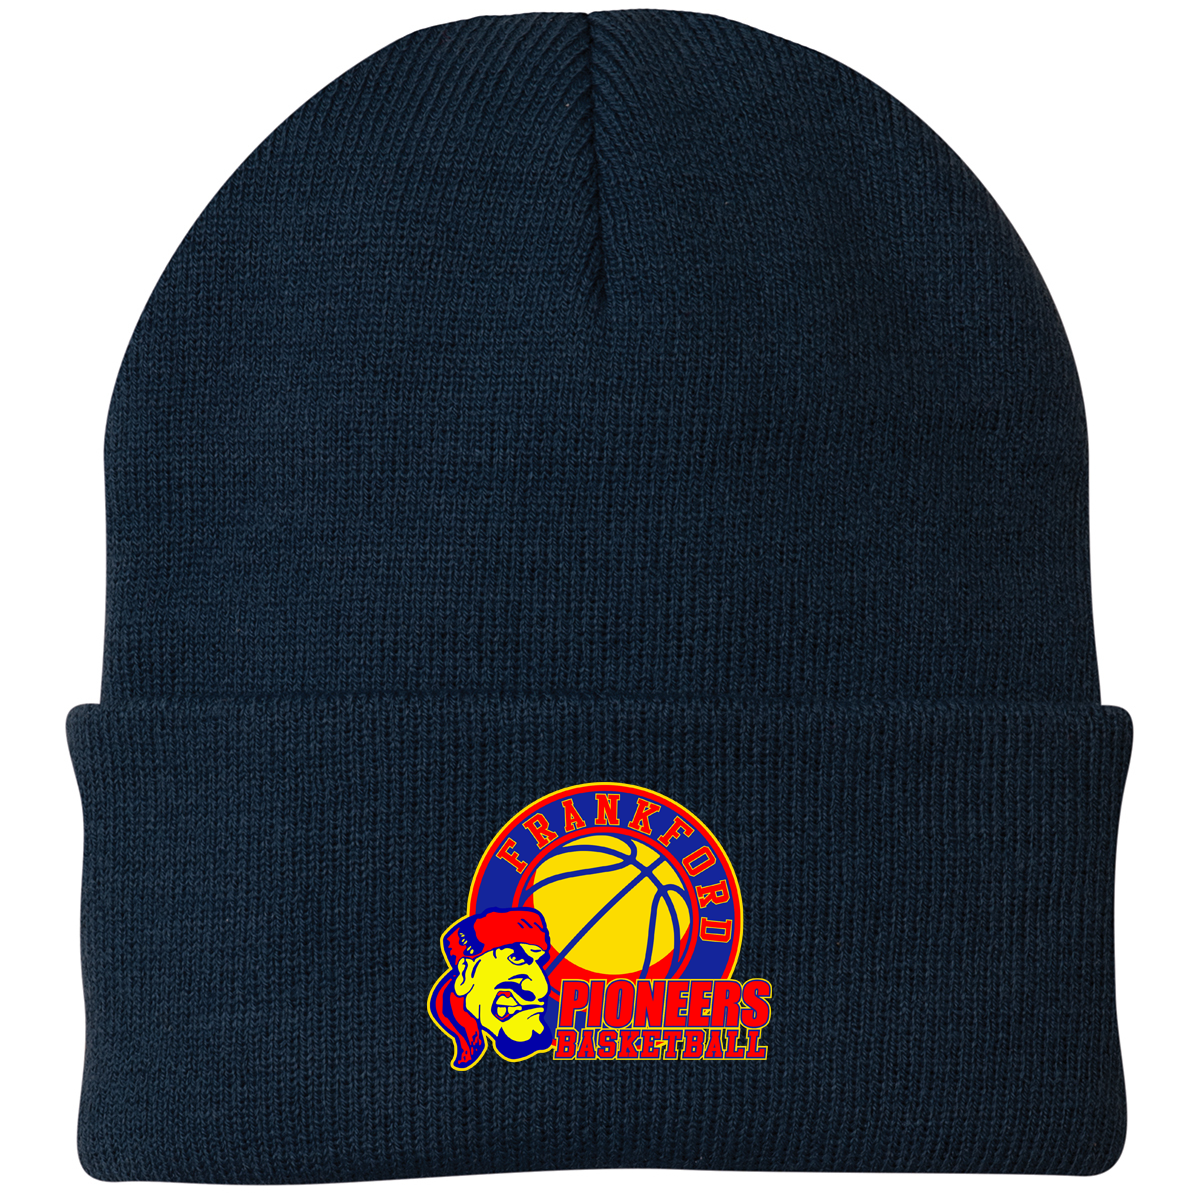 Frankford Basketball Knit Beanie